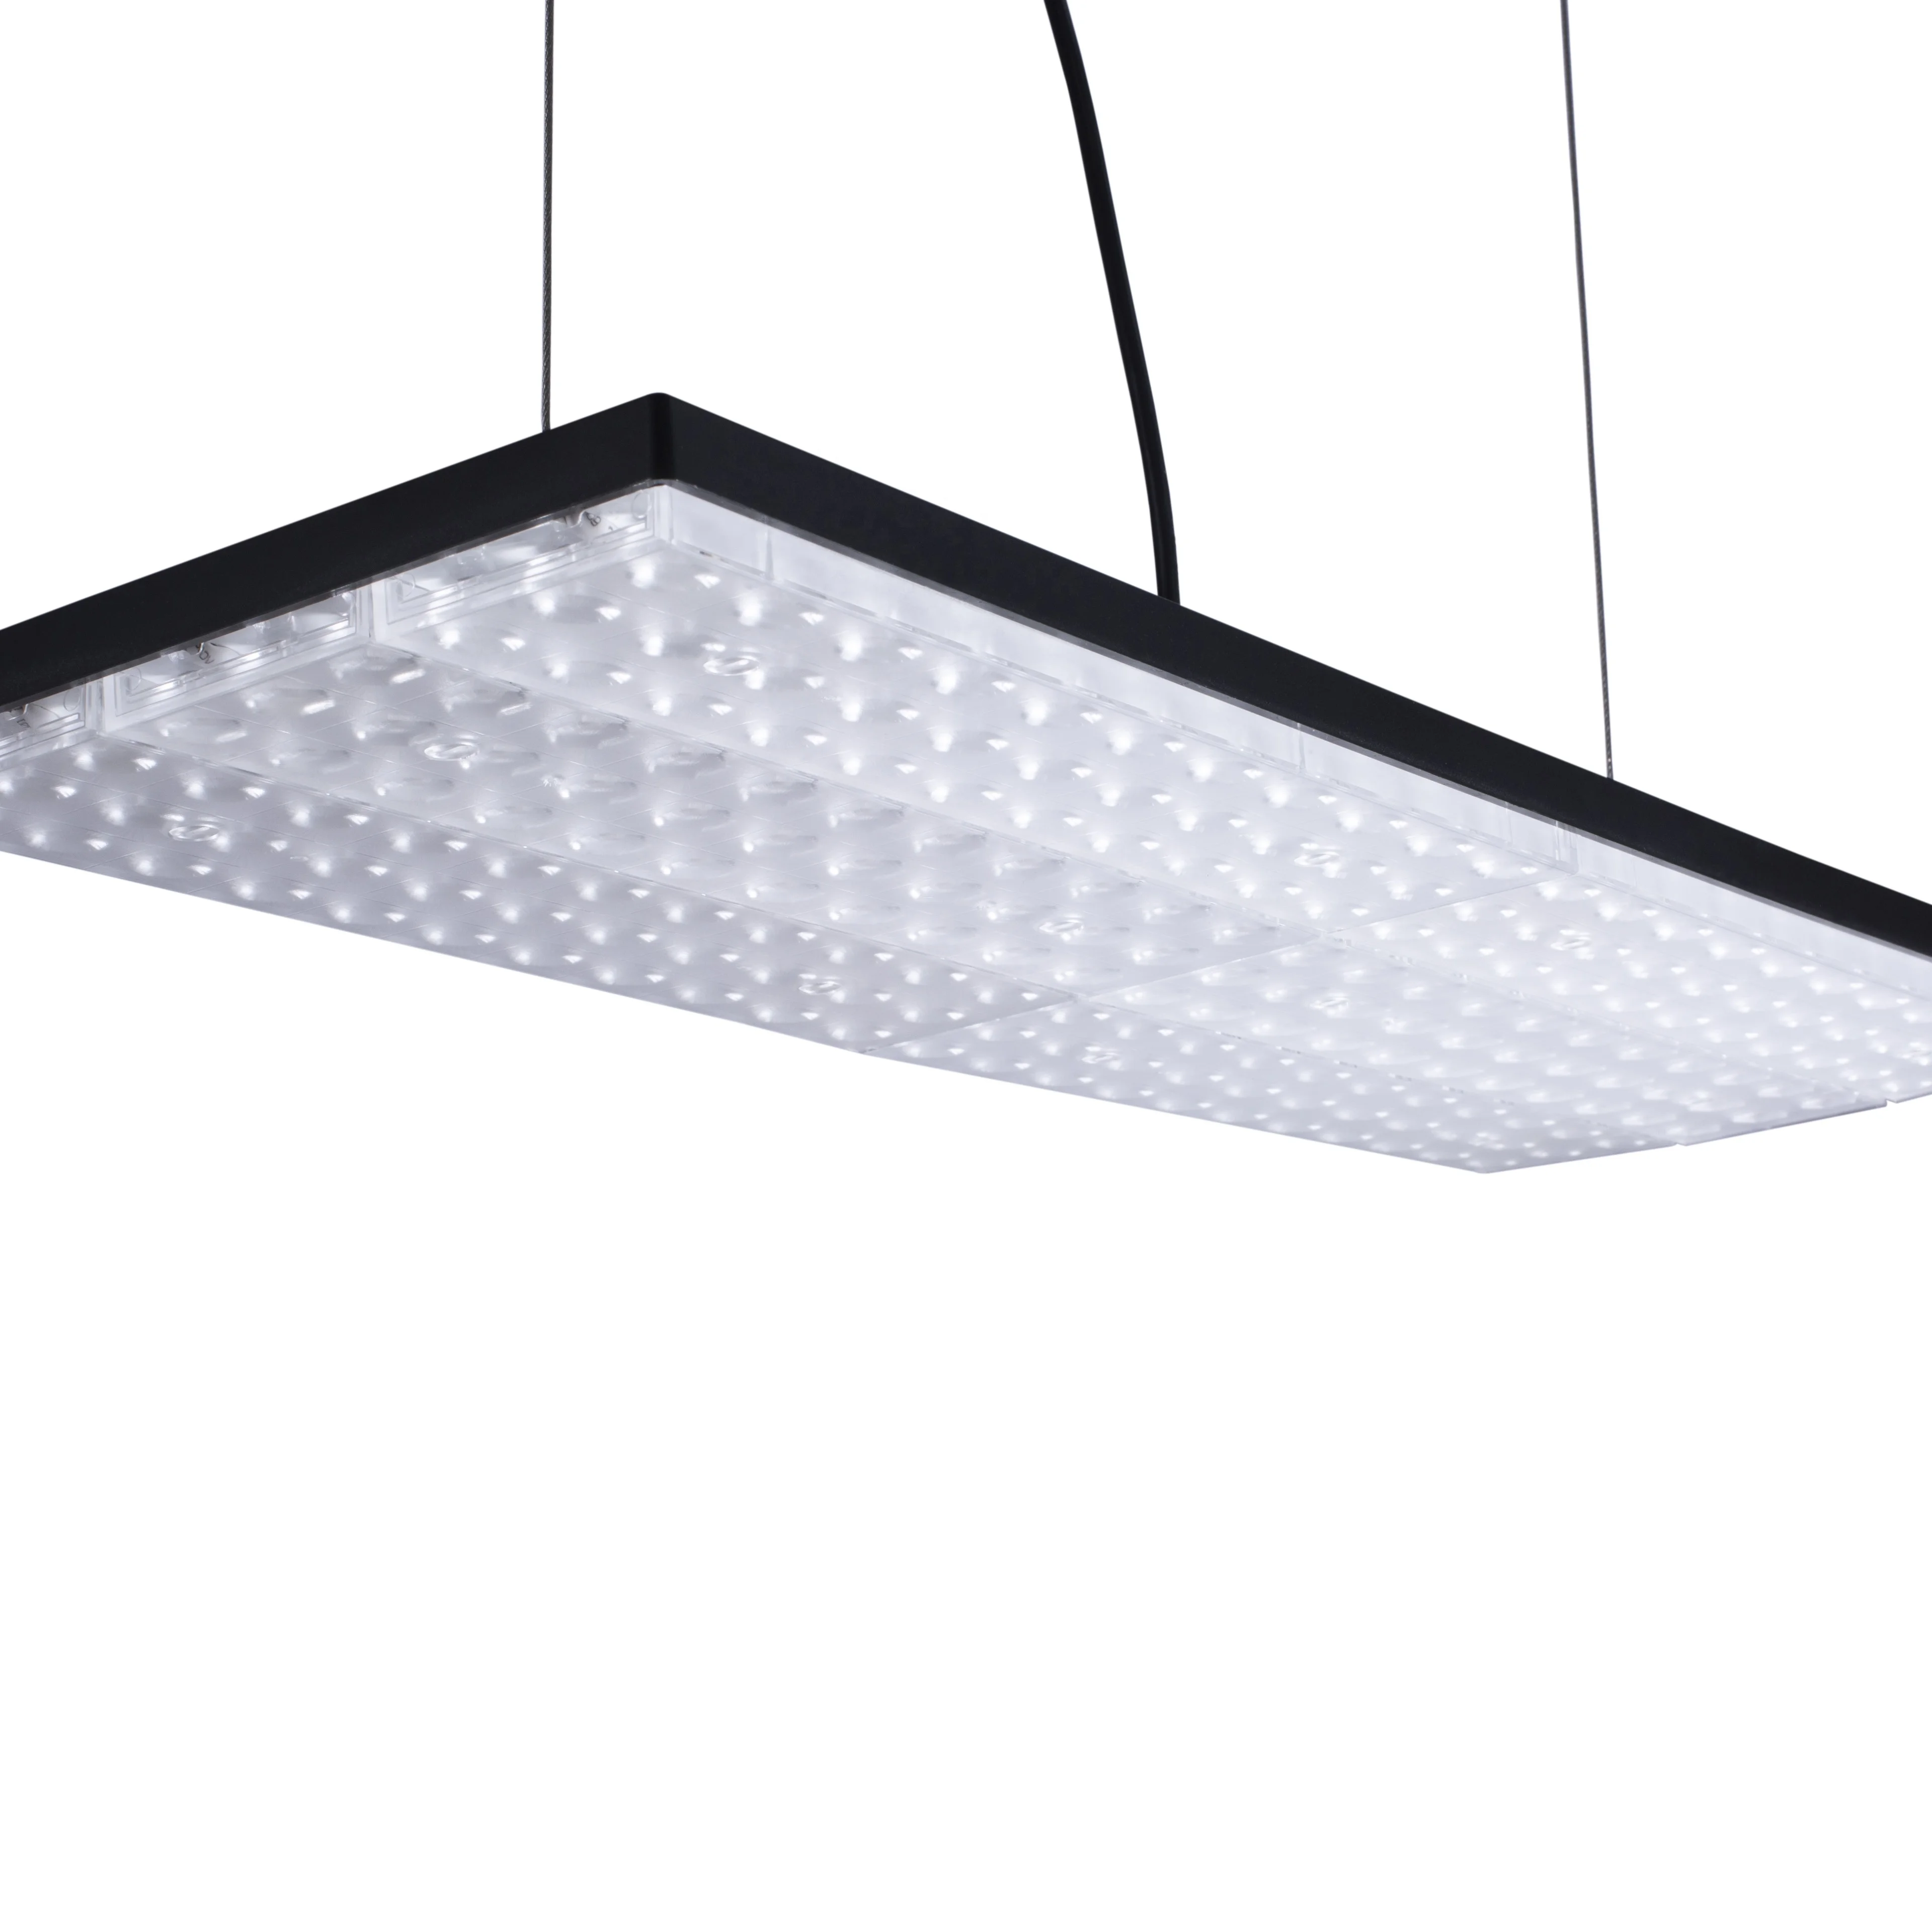 Top retail lighting solution  high lumen efficiency  160lm/w  led track light